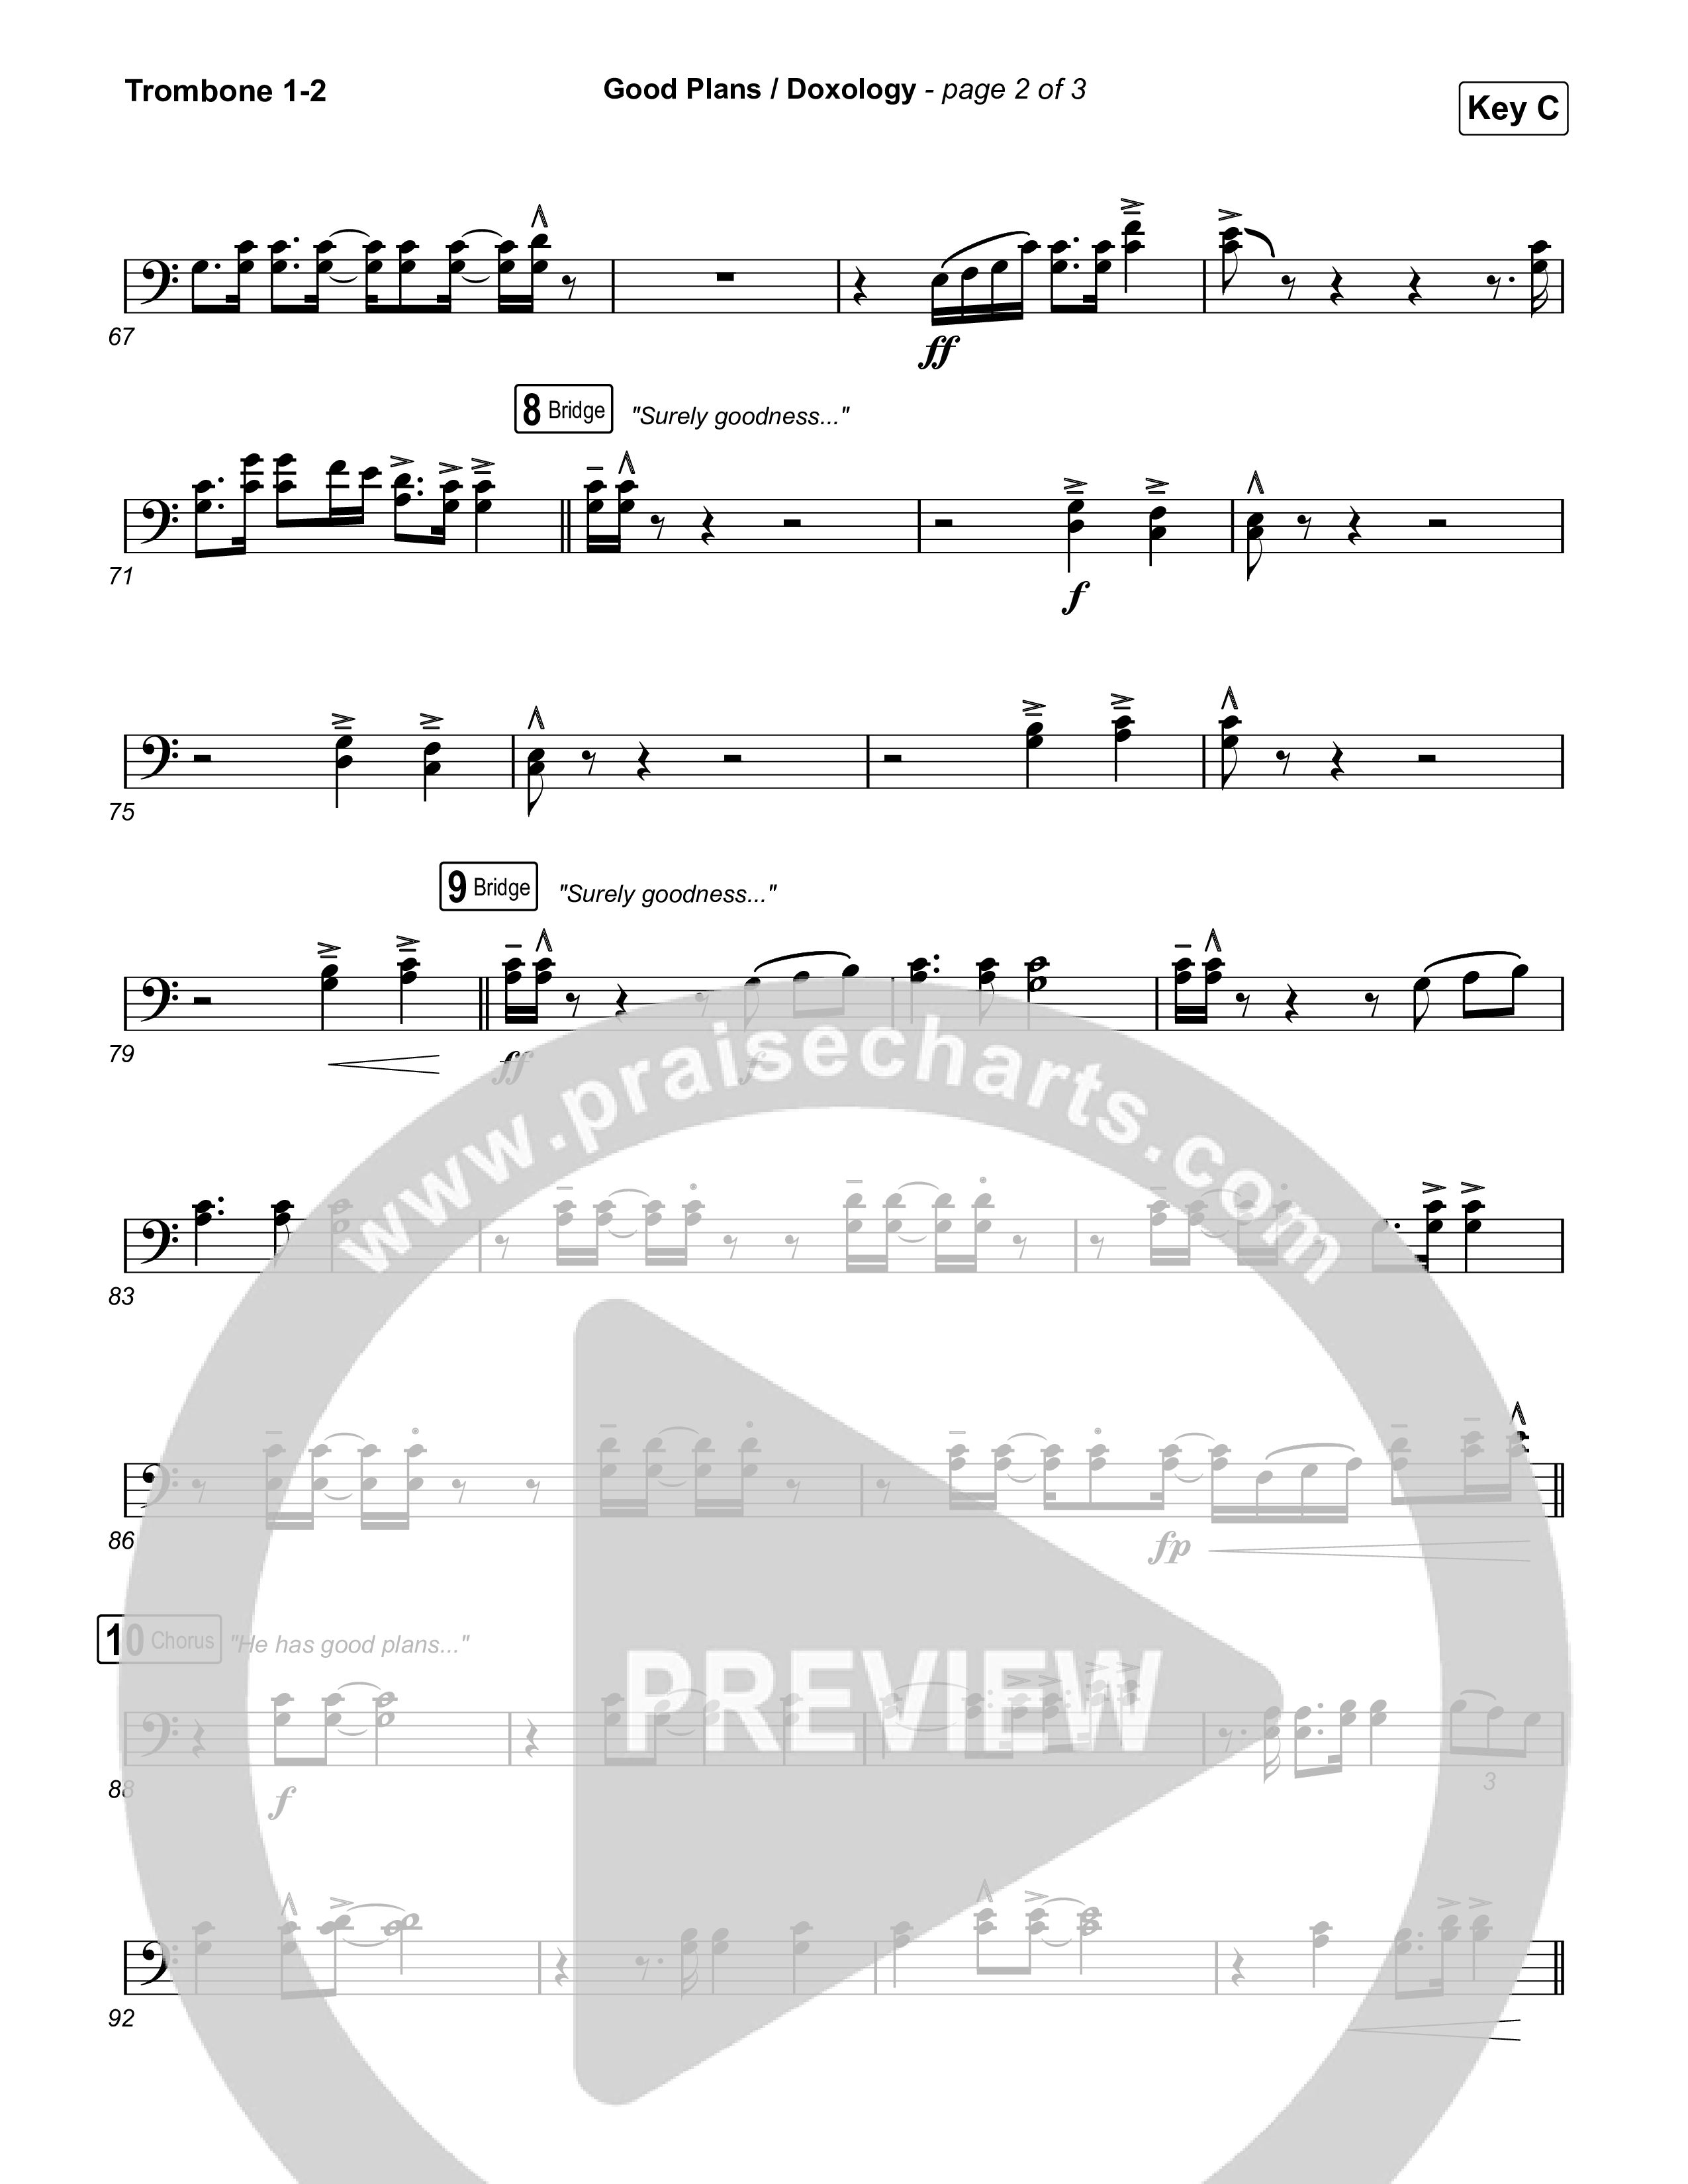 Good Plans/Doxology Trombone 1,2 (Red Rocks Worship)